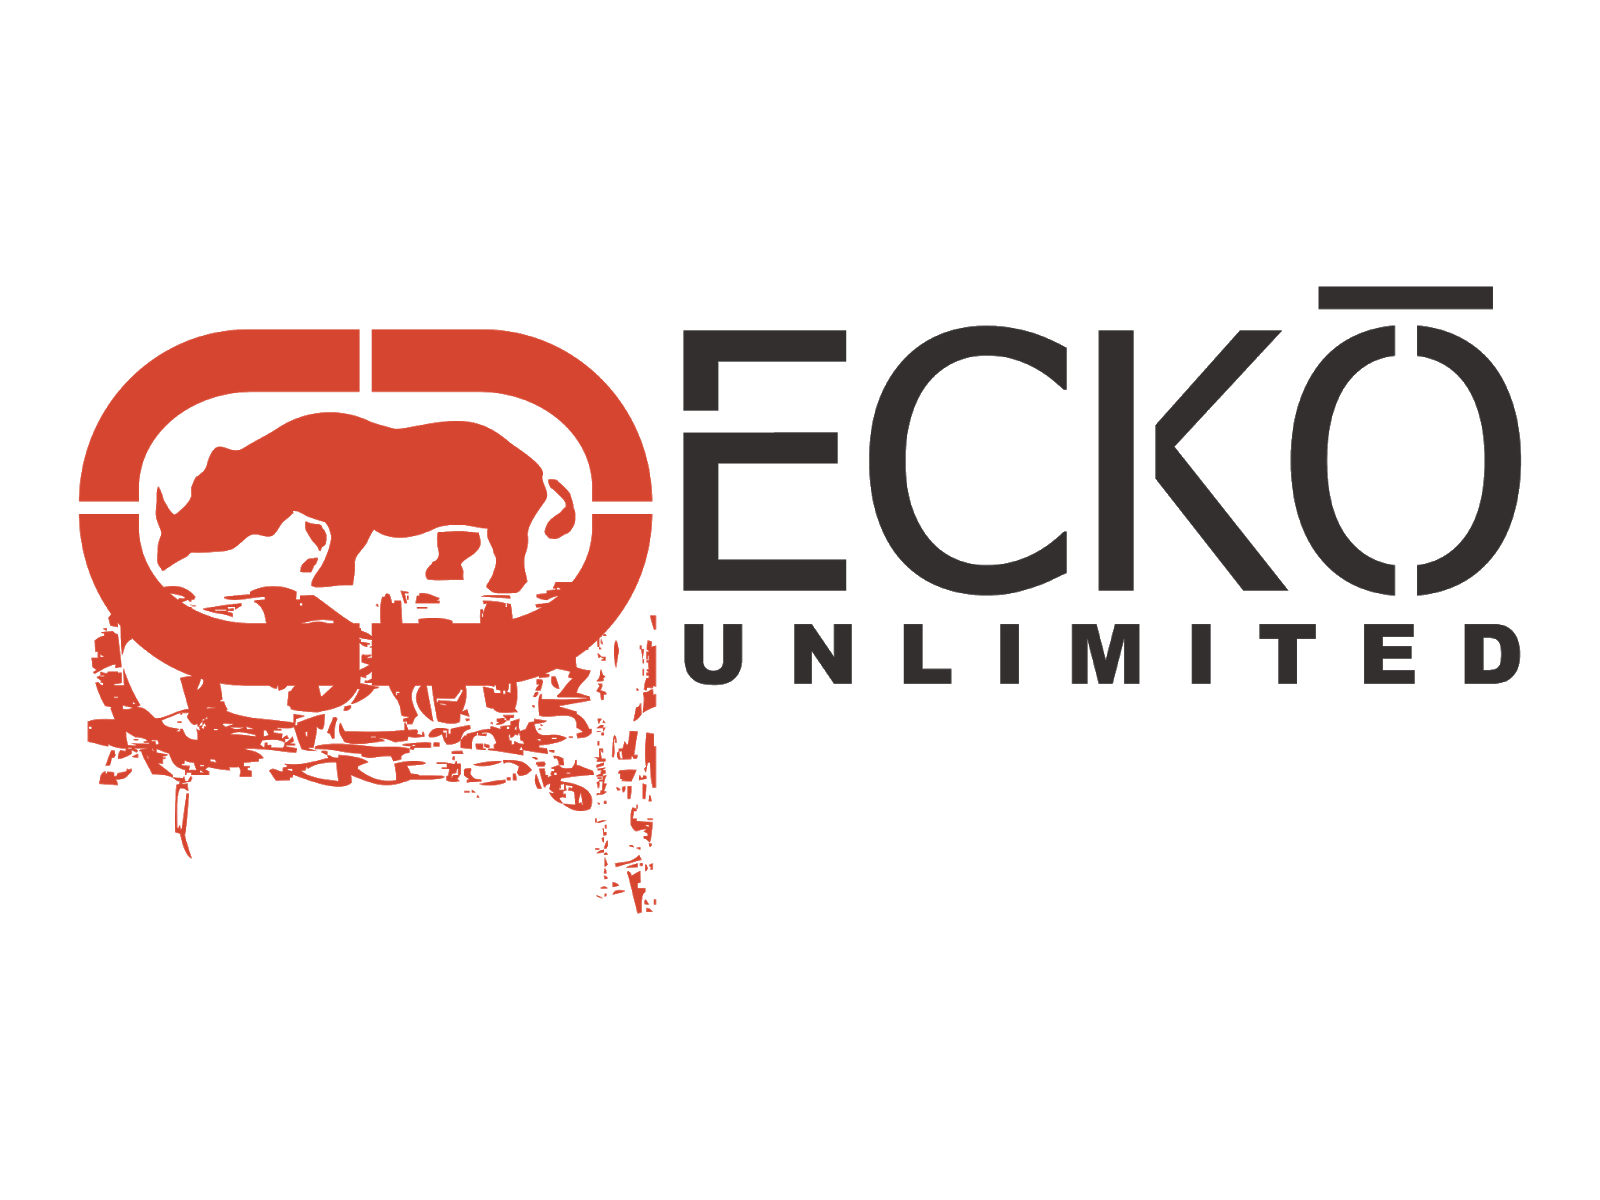 Logo Ecko Unlimited Vector Cdr Amp Png Hd